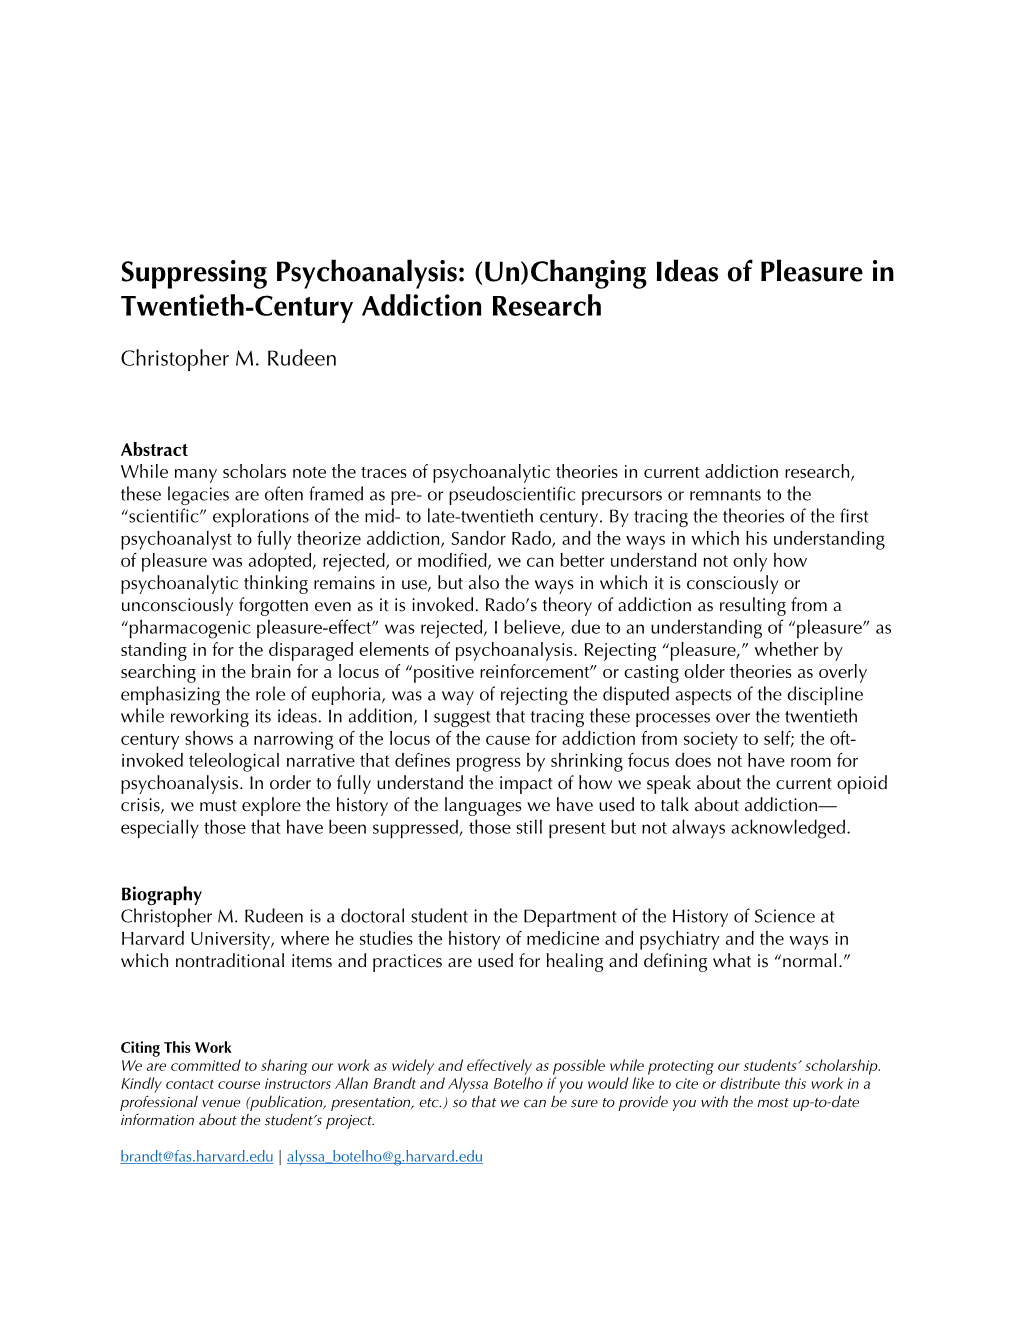 Suppressing Psychoanalysis: (Un)Changing Ideas of Pleasure in Twentieth-Century Addiction Research